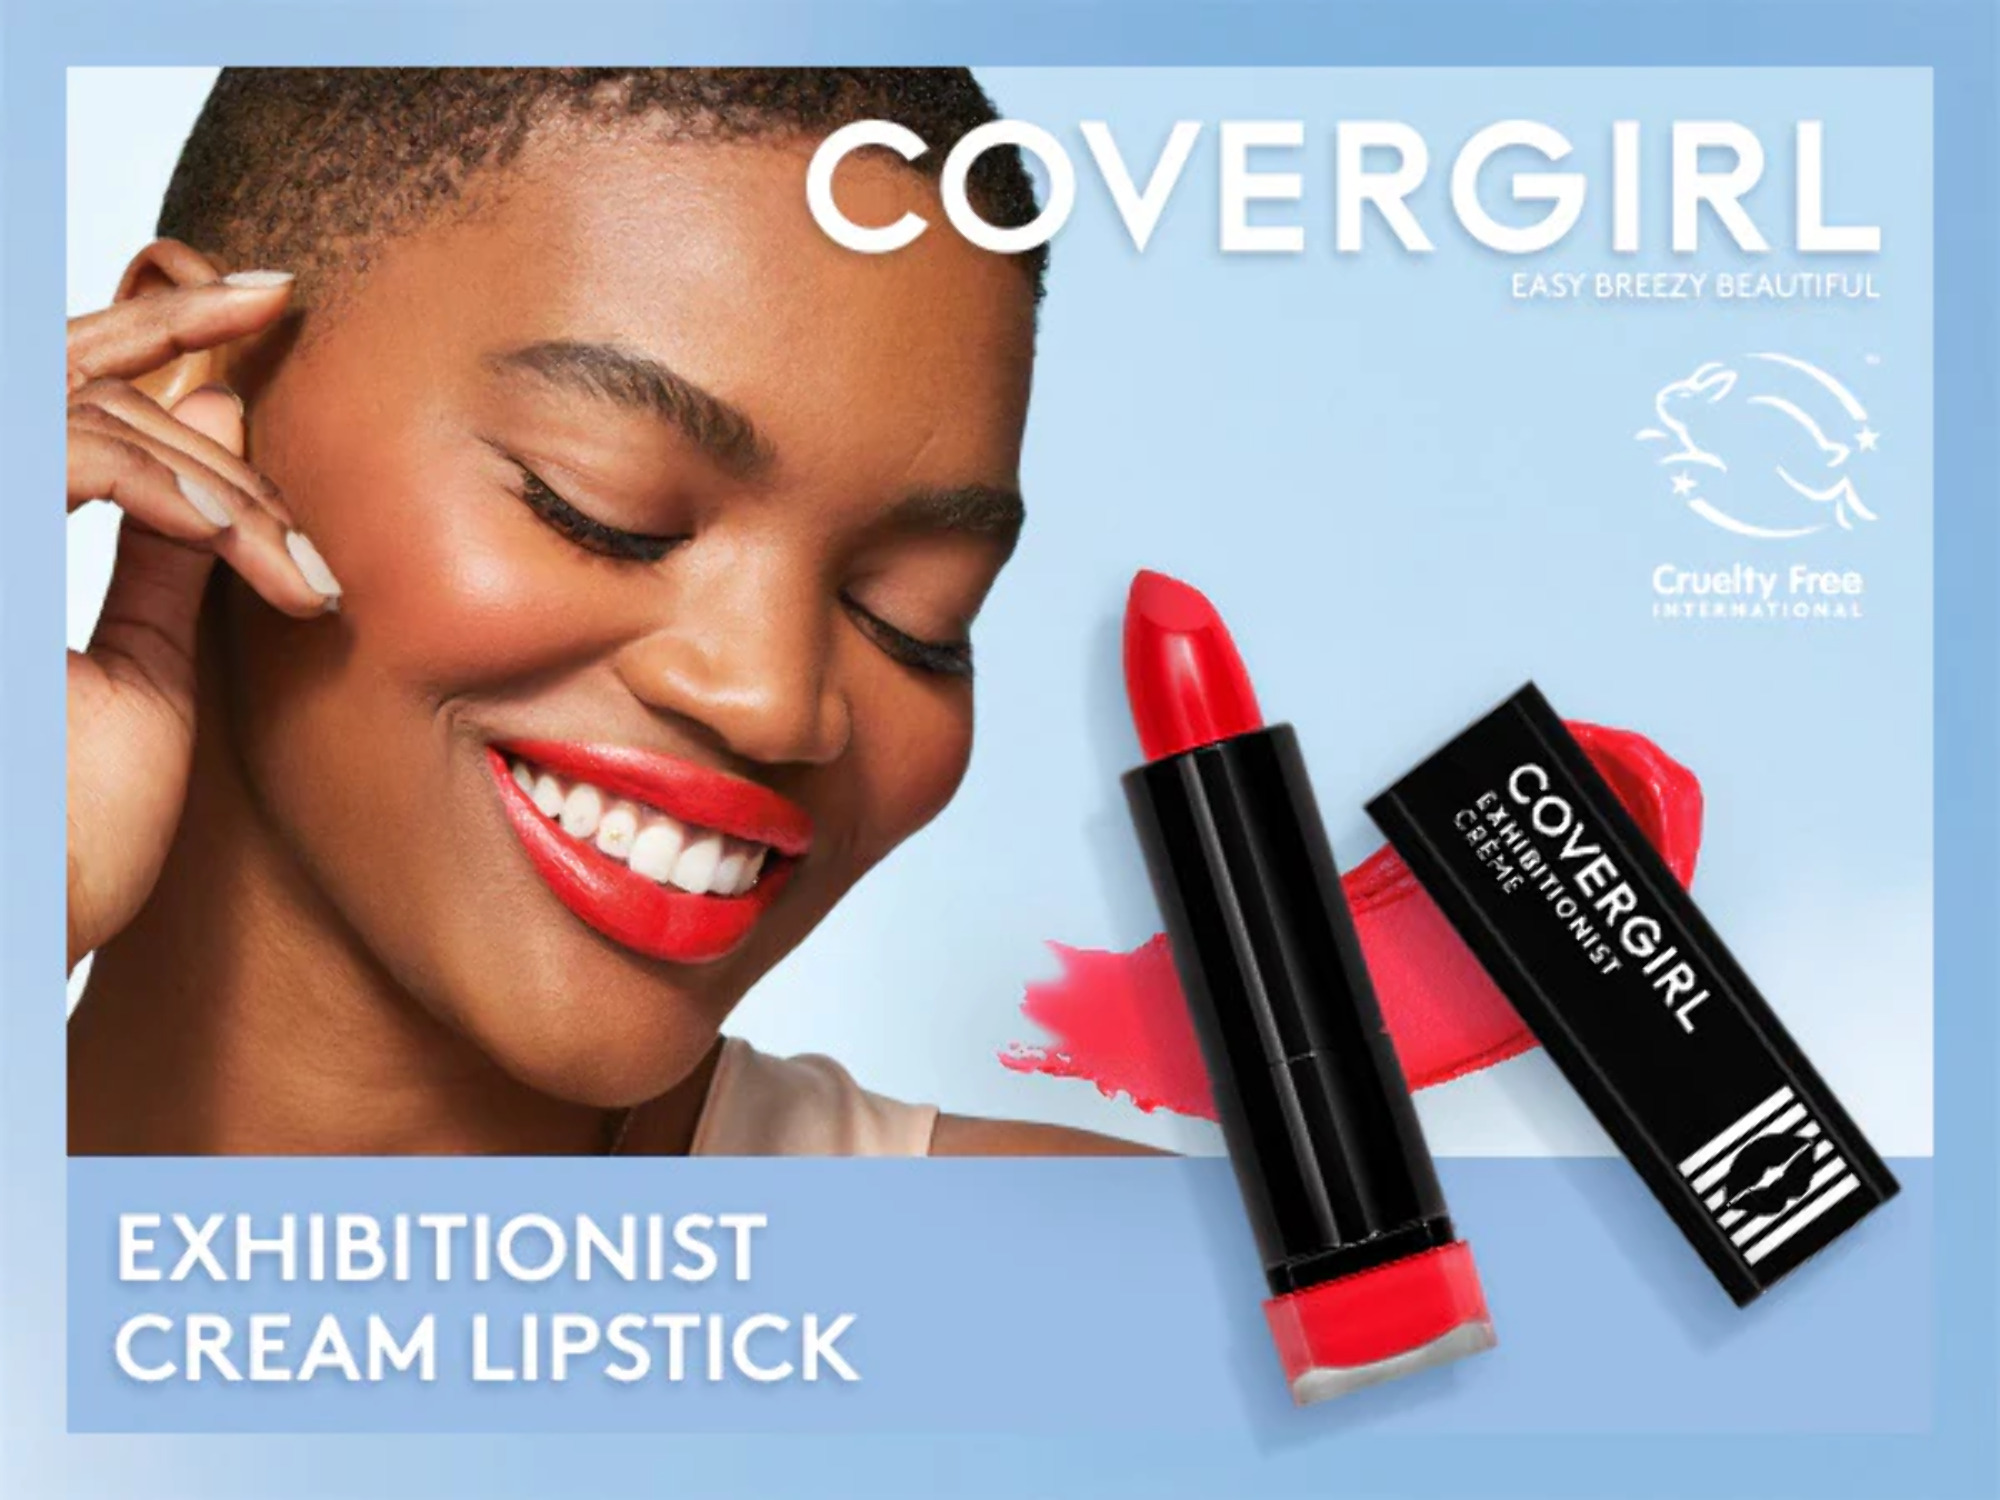 COVERGIRL Exhibitionist Cream Lipstick, 245 Honeyed Bloom, 0.12 oz - image 3 of 6